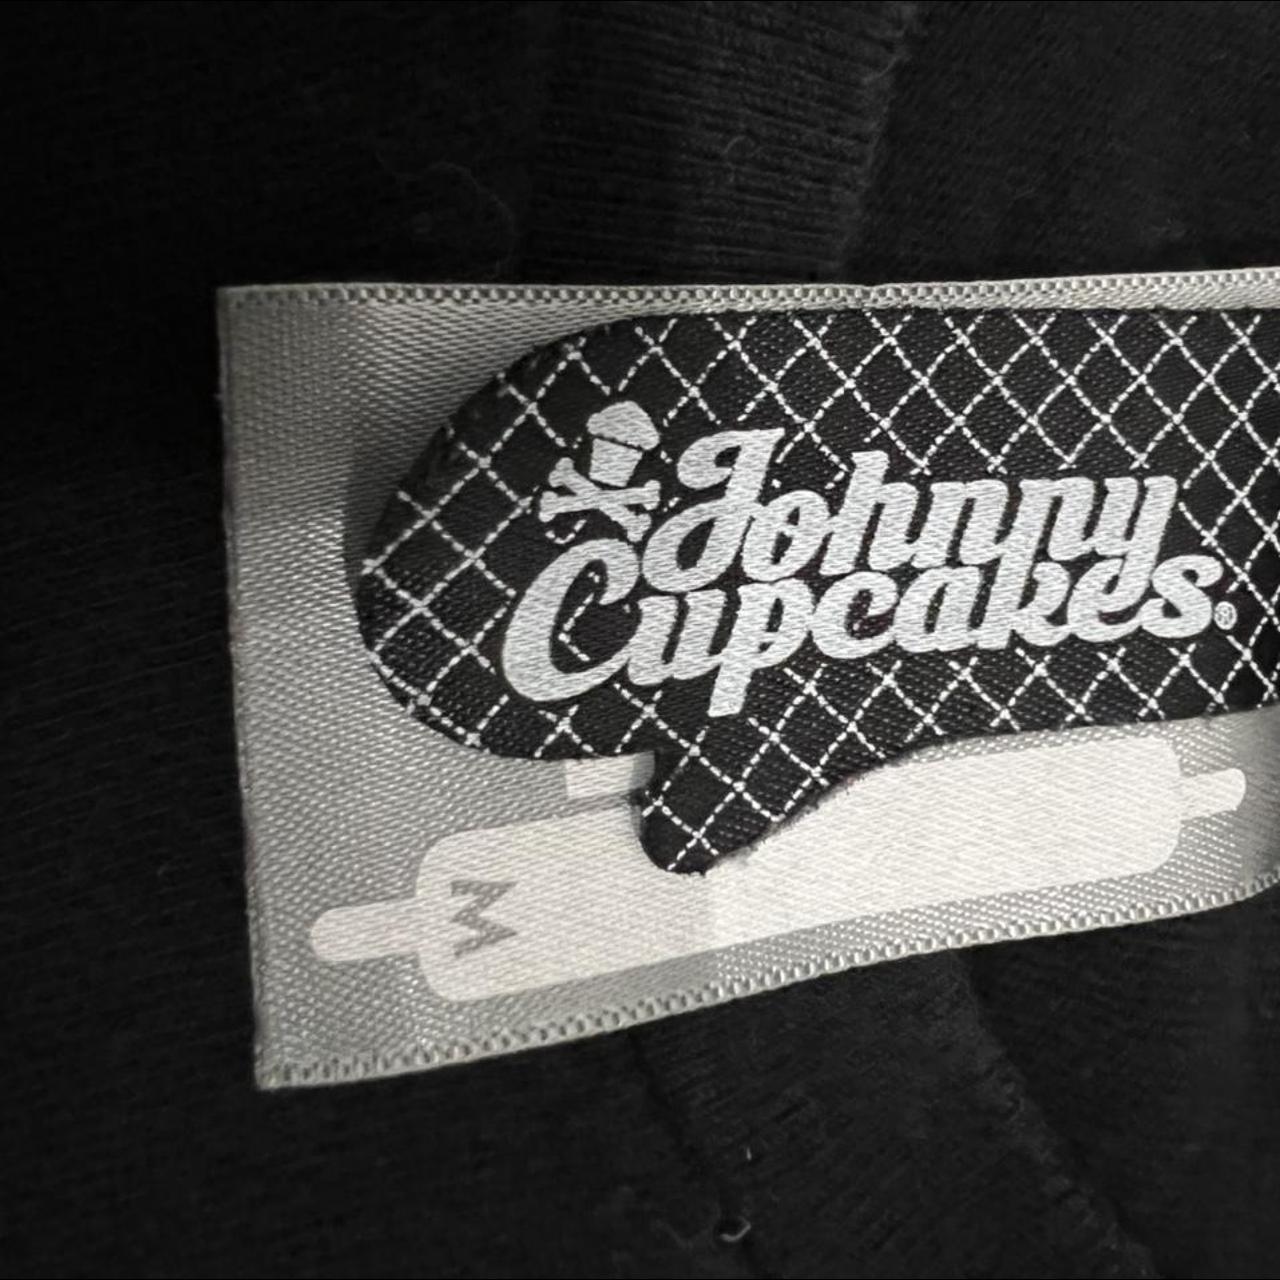 Product Image 4 - Johnny Cupcakes Venom T-Shirt
Size: M